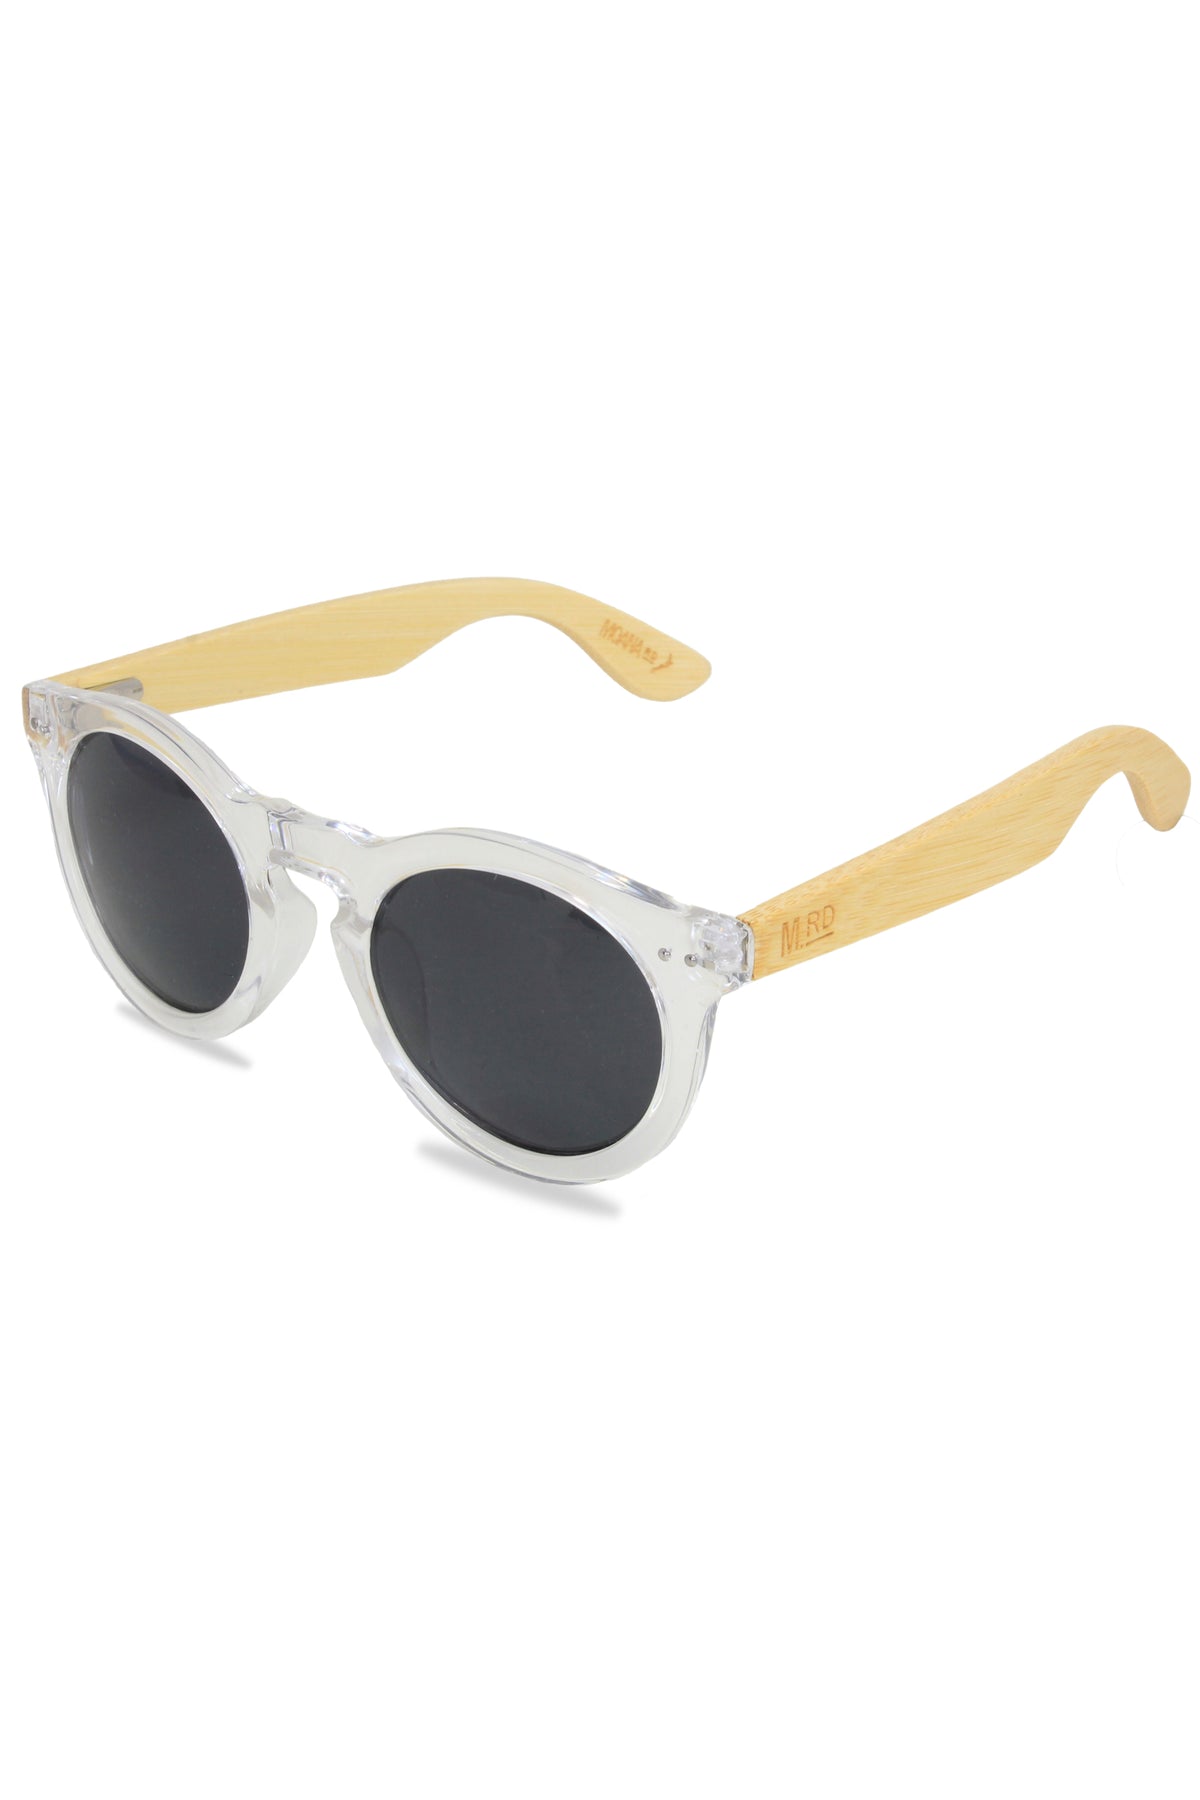 Grace Kelly Sunglasses Clear